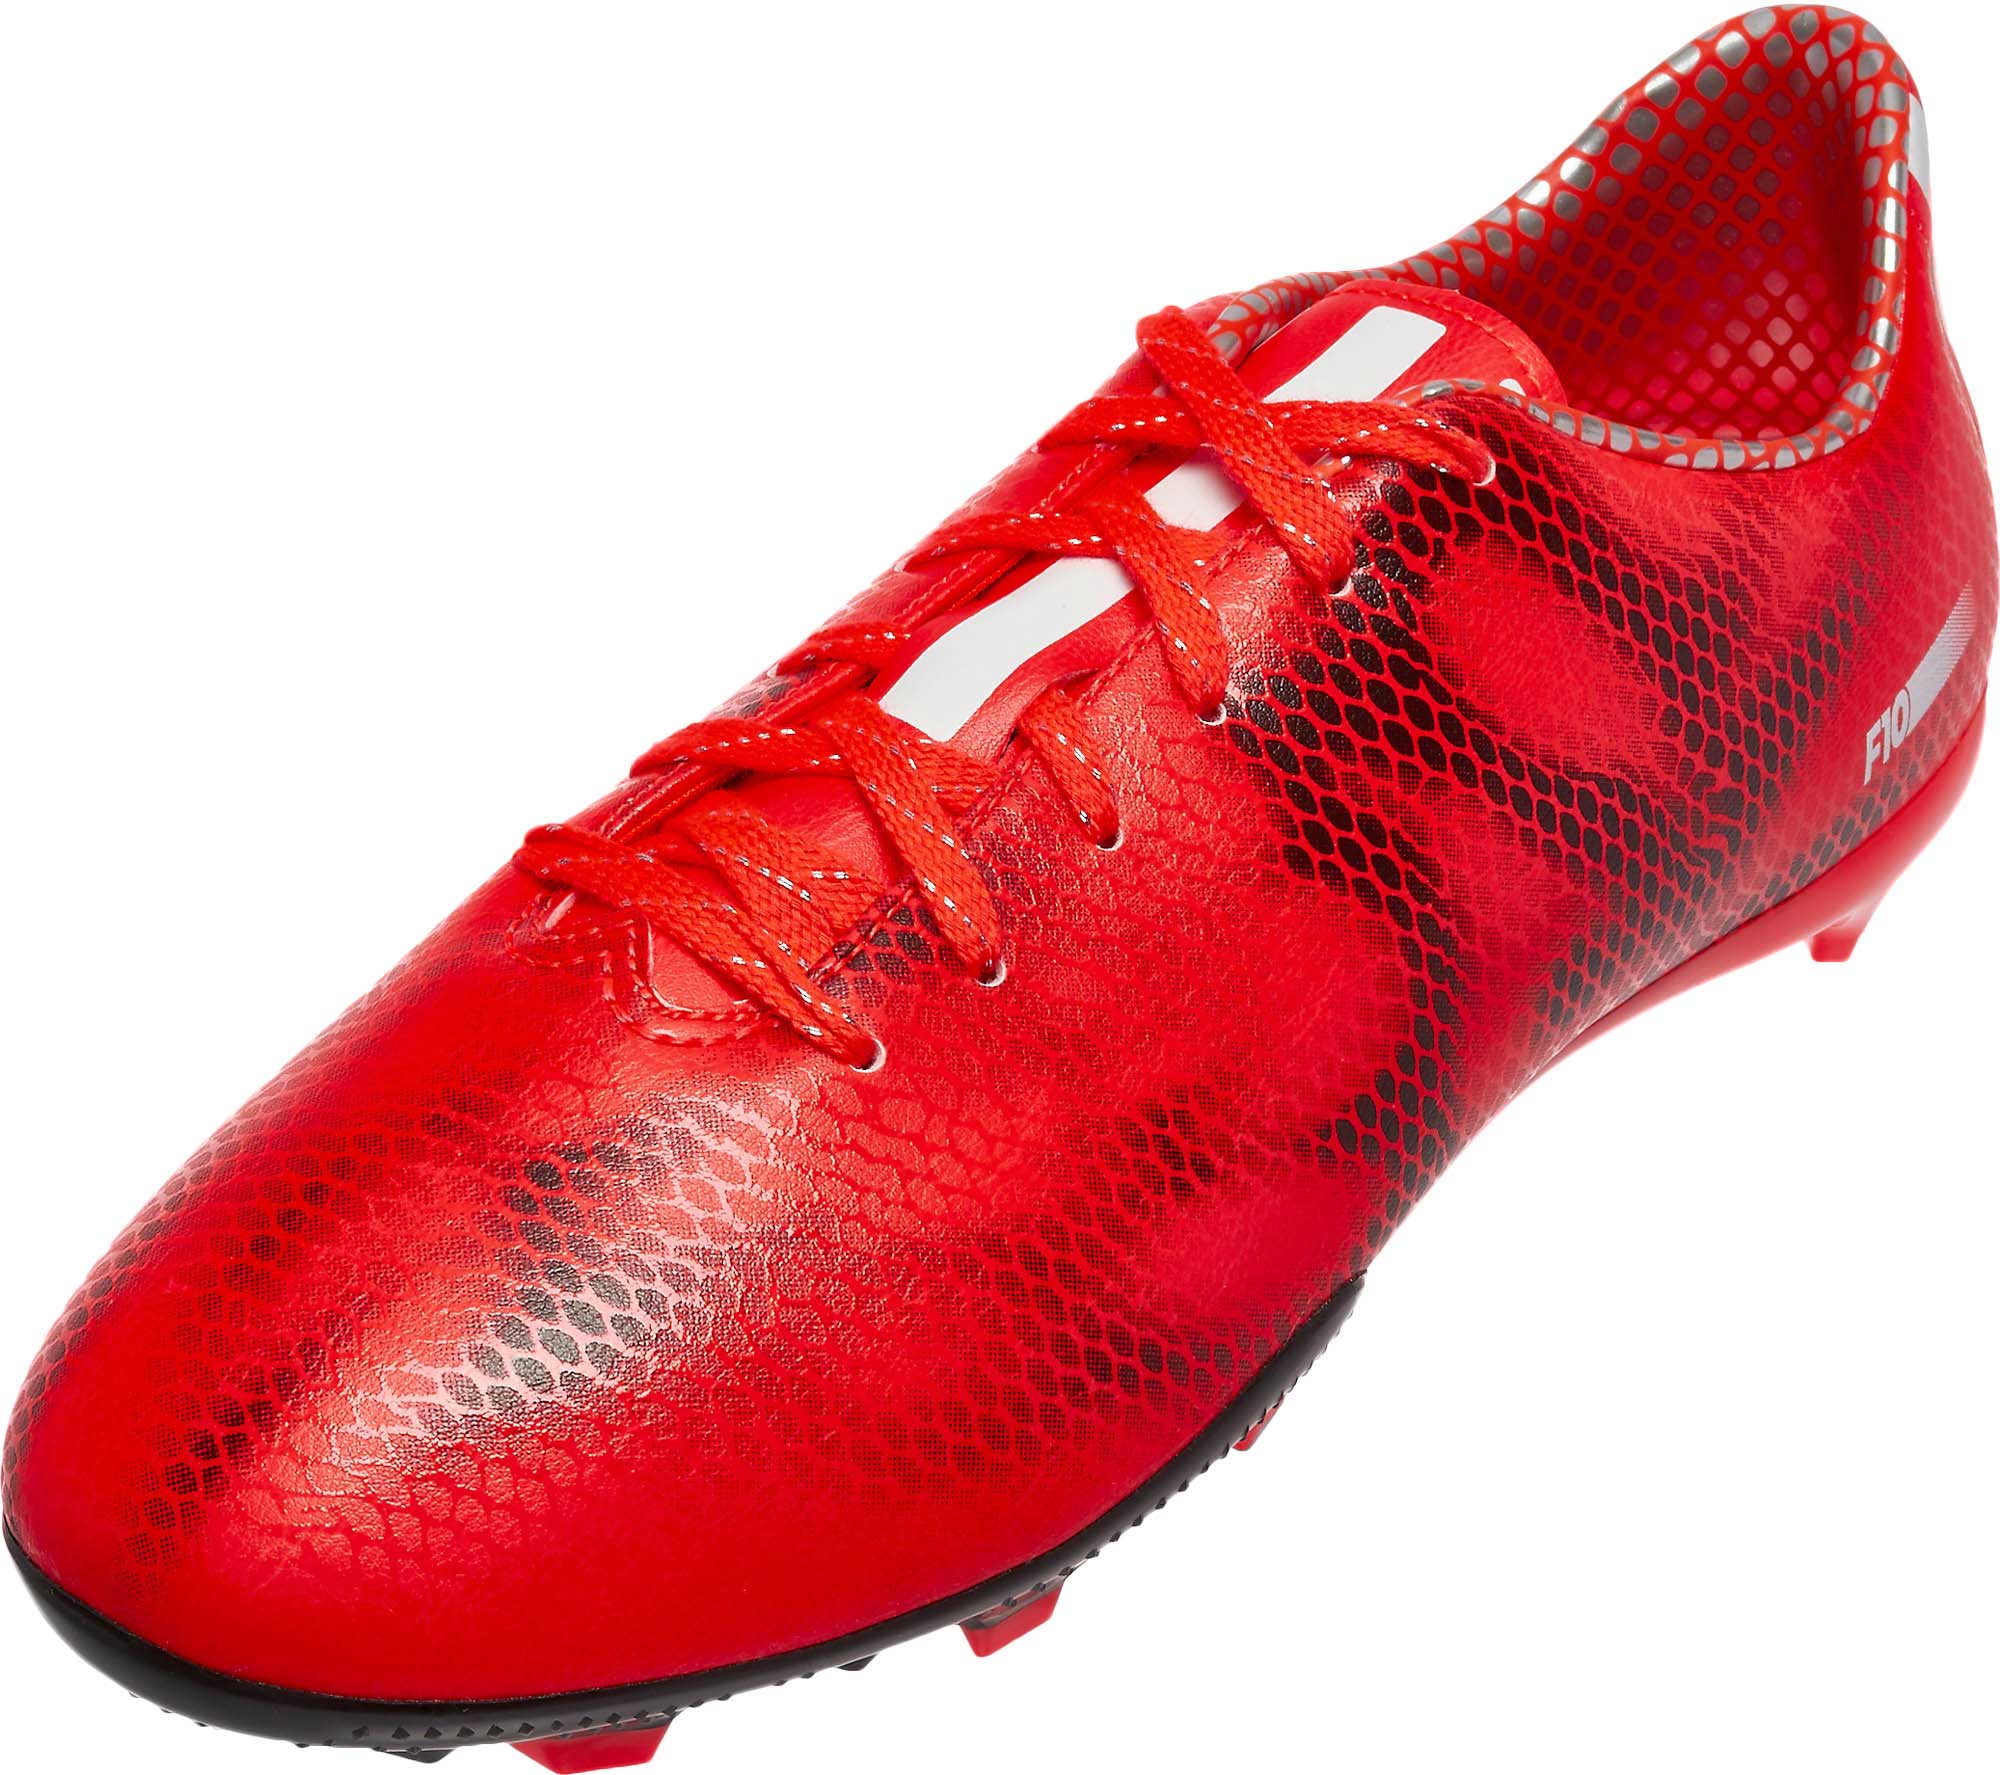 bale soccer shoes